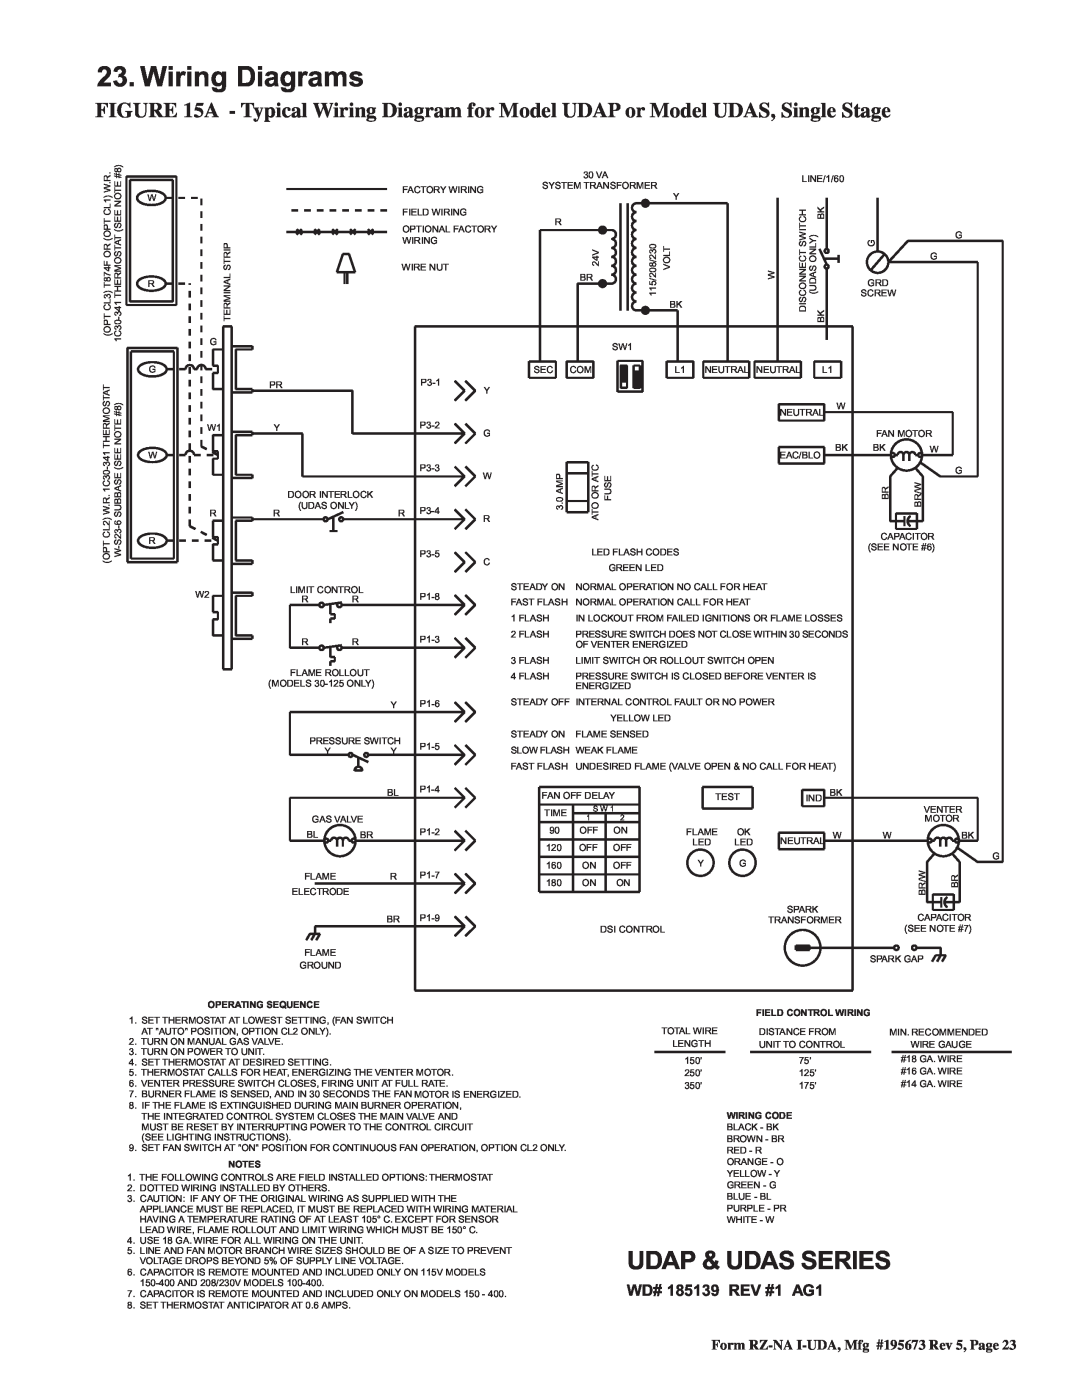 Thomas & Betts UDAP Wiring Diagrams, Udap & Udas Series, Form RZ-NA I-UDA,Mfg #195673 Rev 5, Page, Operating Sequence 